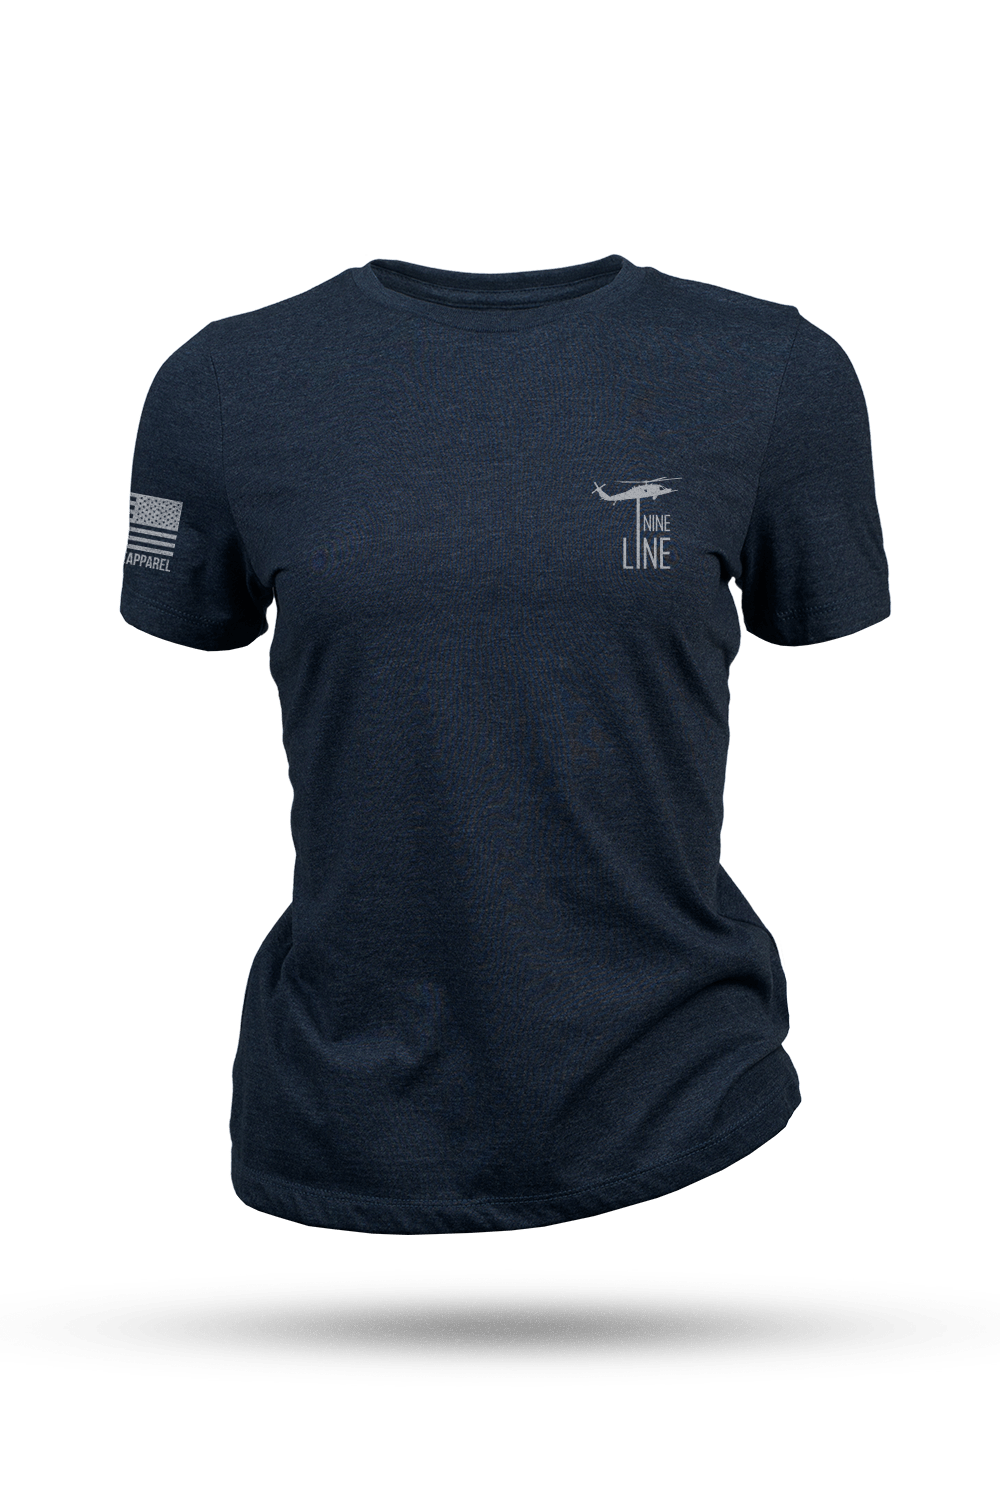 Women's T-Shirt - Strong Women / May We - Nine Line Apparel